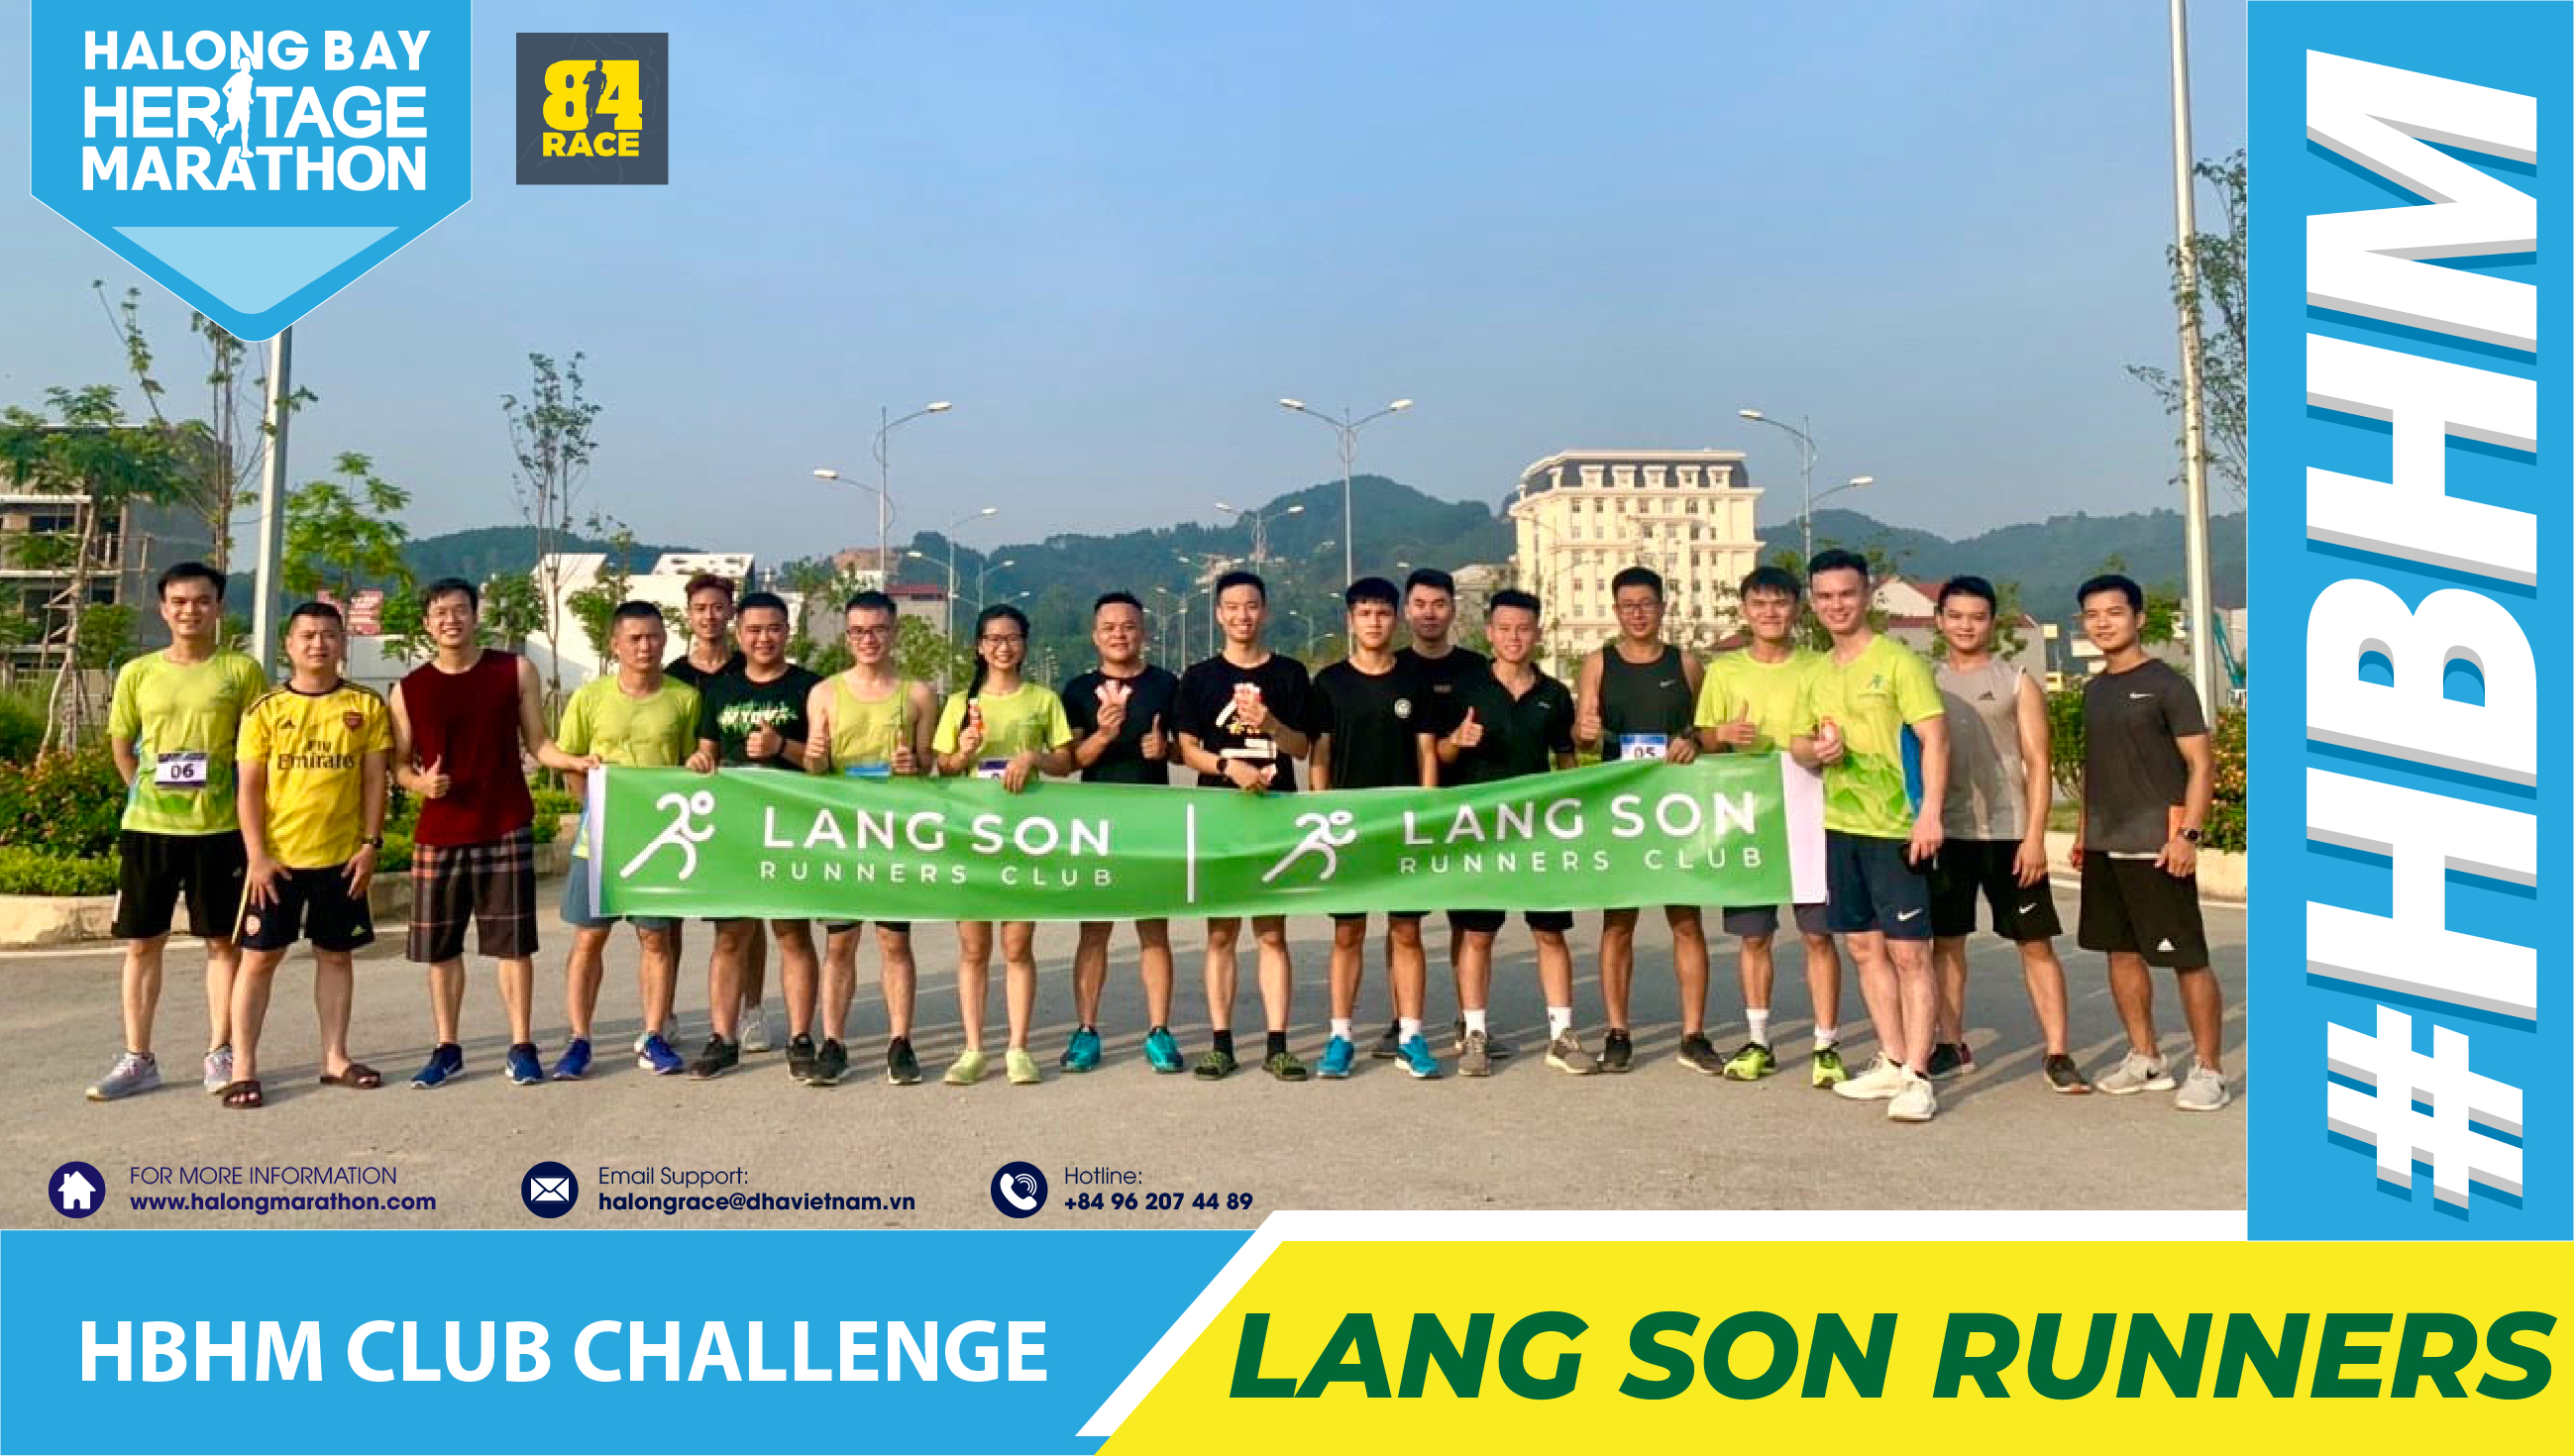 HBHM Challenge 2020 - LANGSON Runners Club